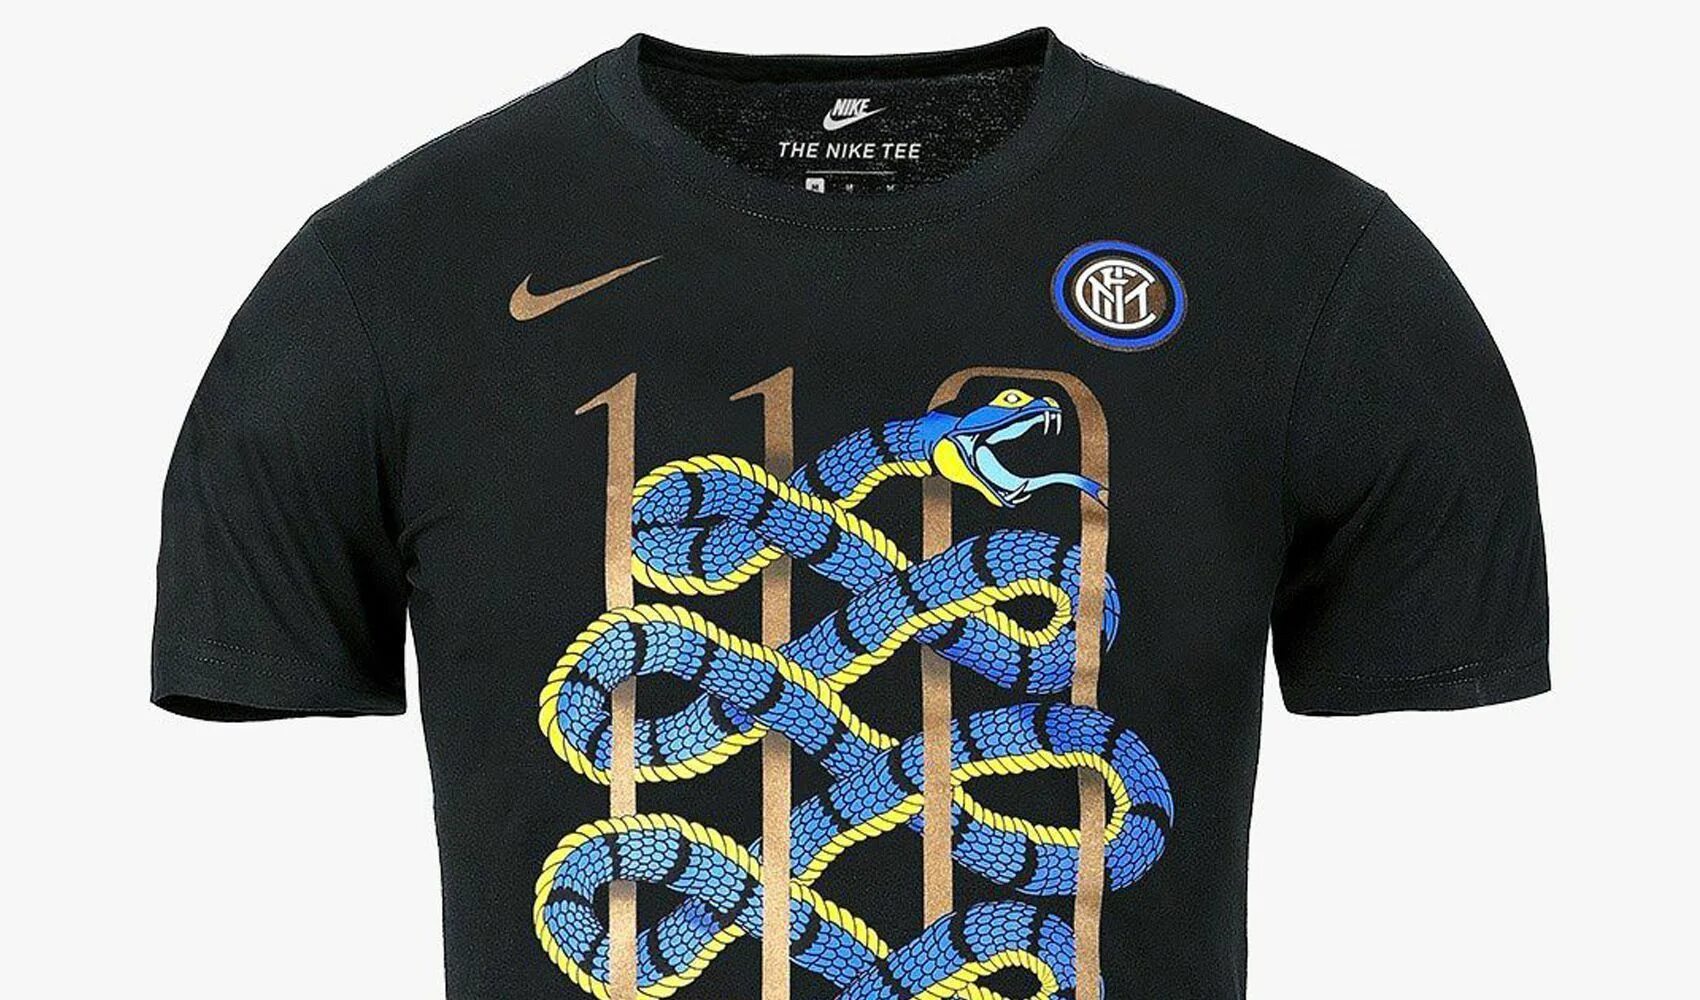 Inter t. Inter t Shirt. Футболка Inter. Inter t Shirt Beck. Nike Inter Milan футболка.